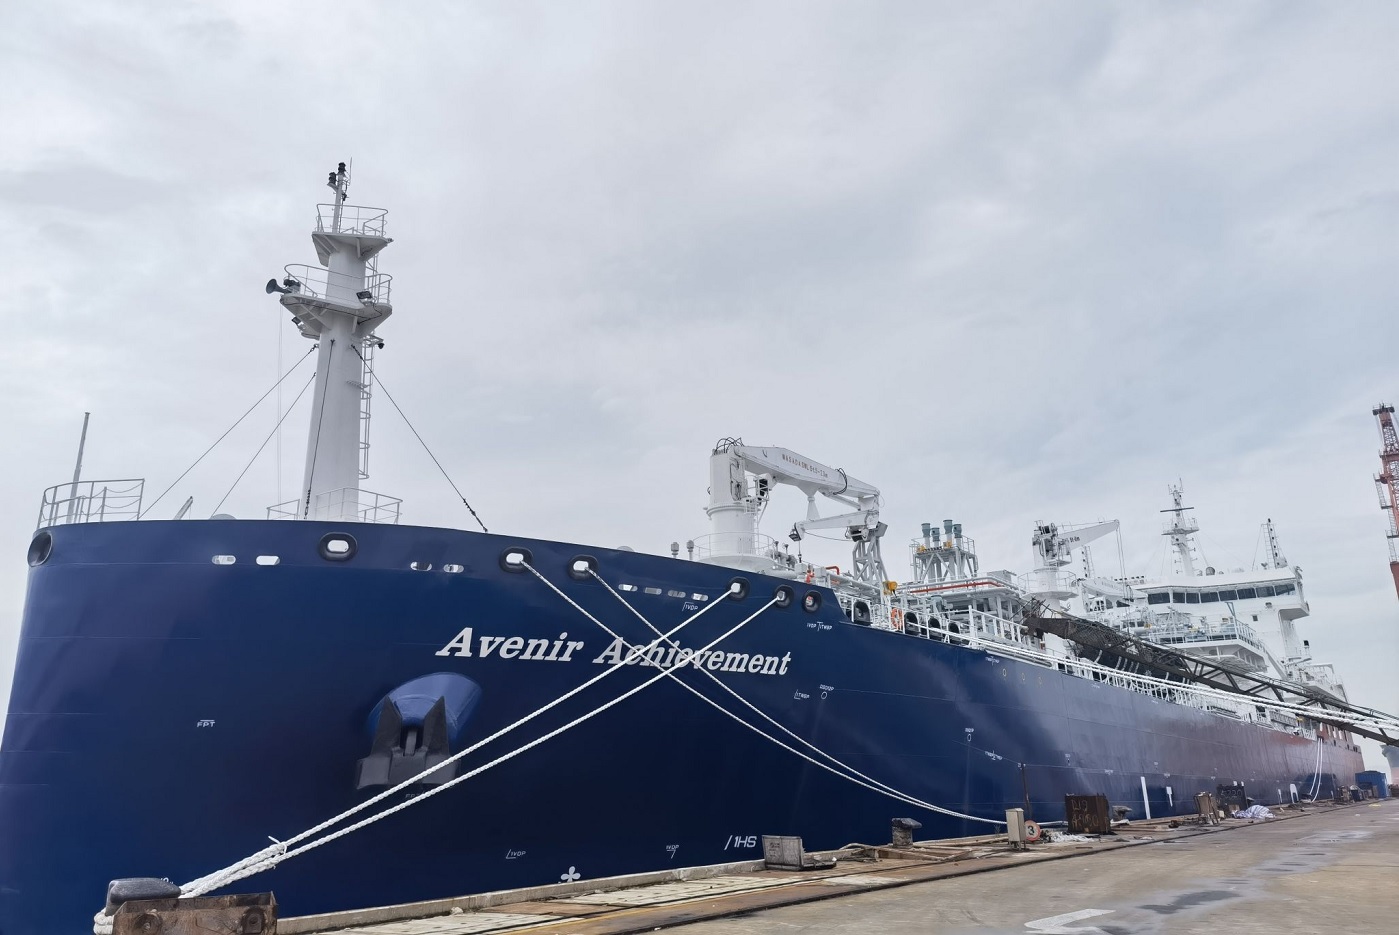 Avenir LNG to welcome Avenir Achievement LNG bunkering vessel